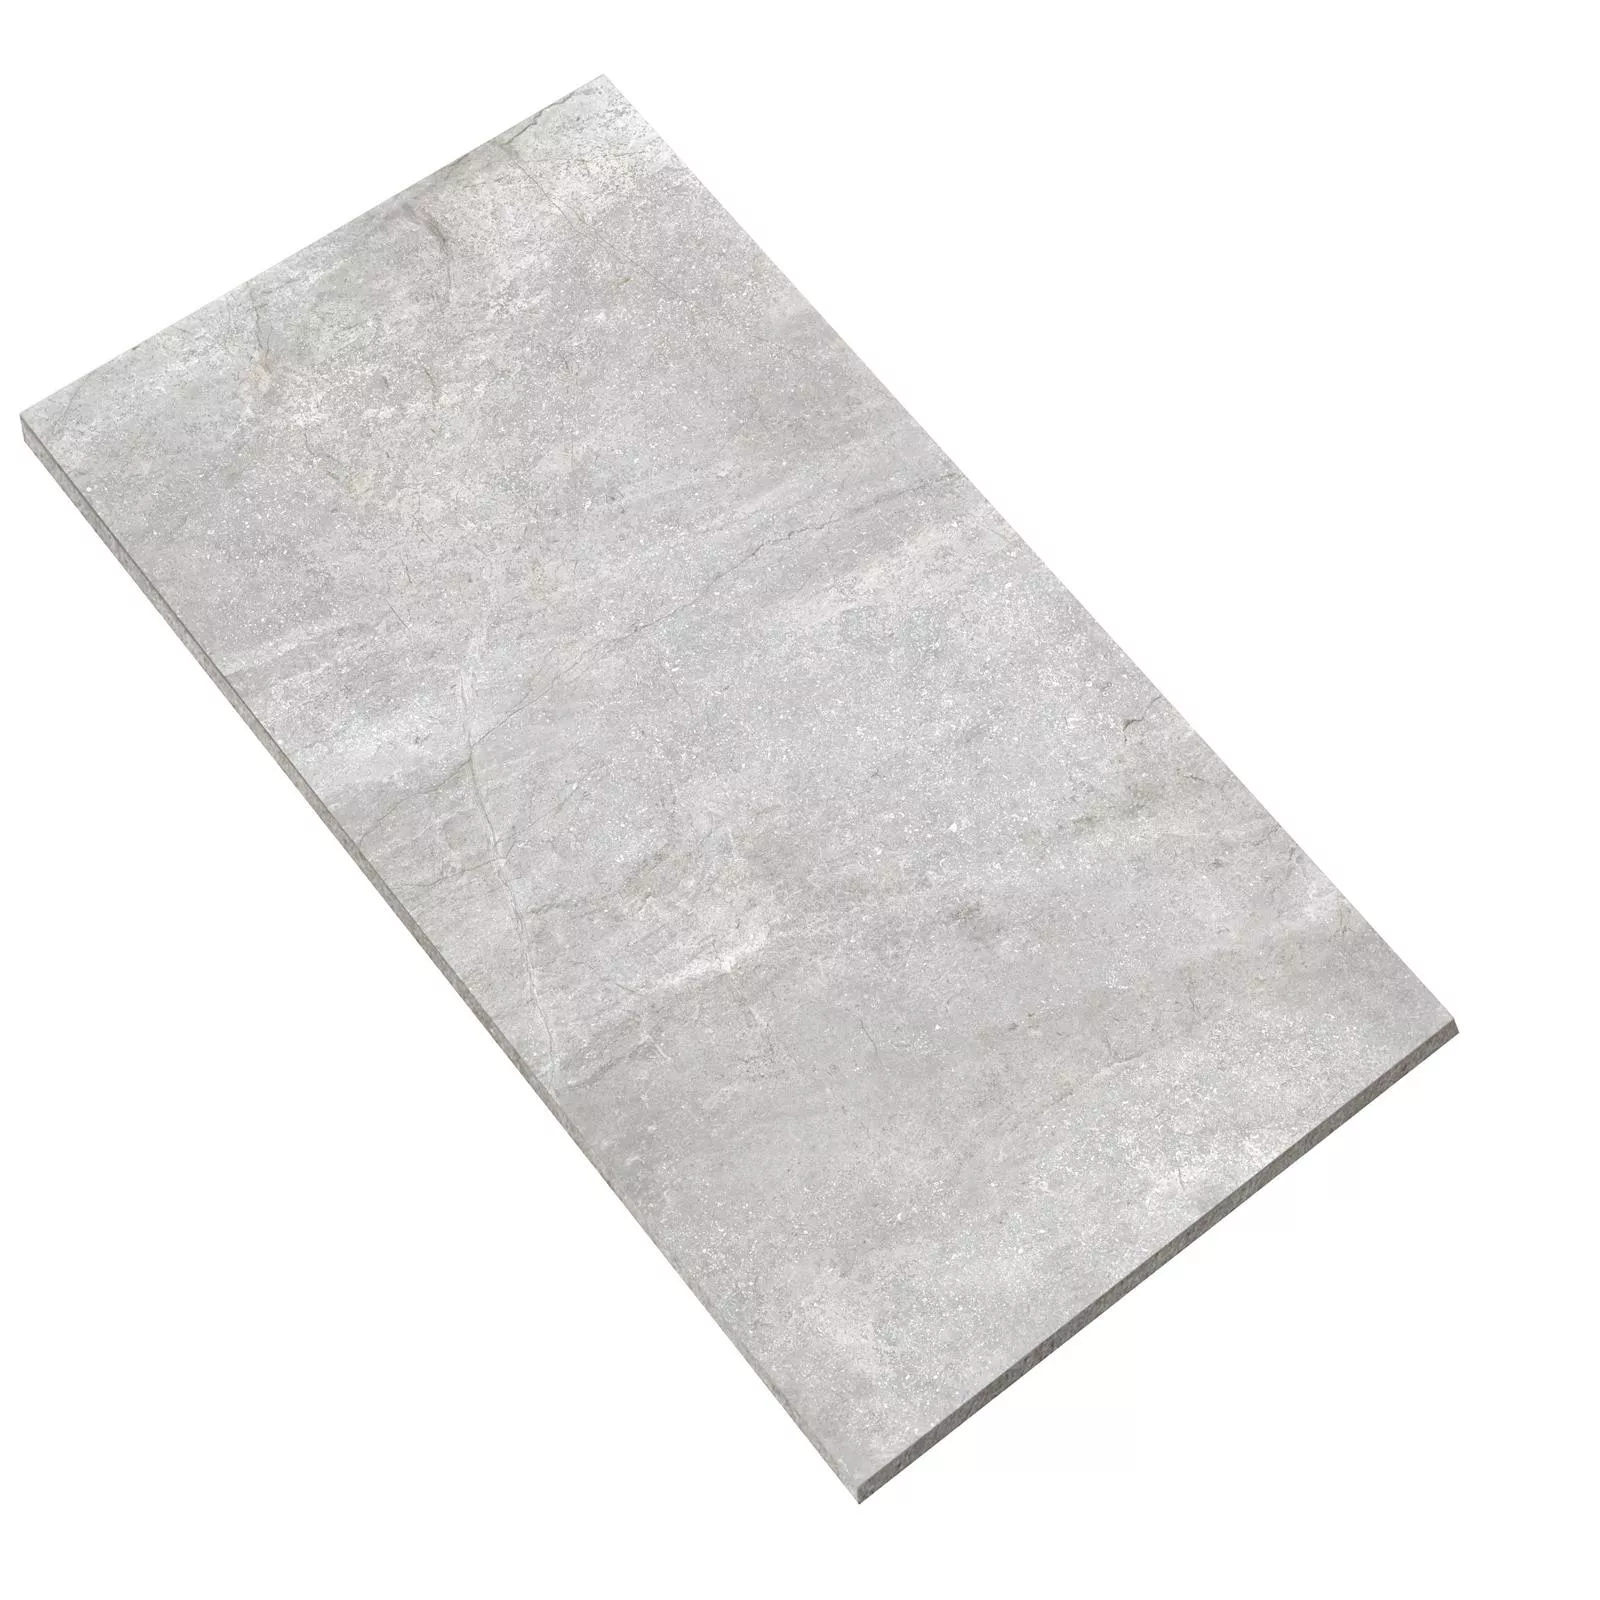 Gresie Noiron Lustruit Argint 60x120cm